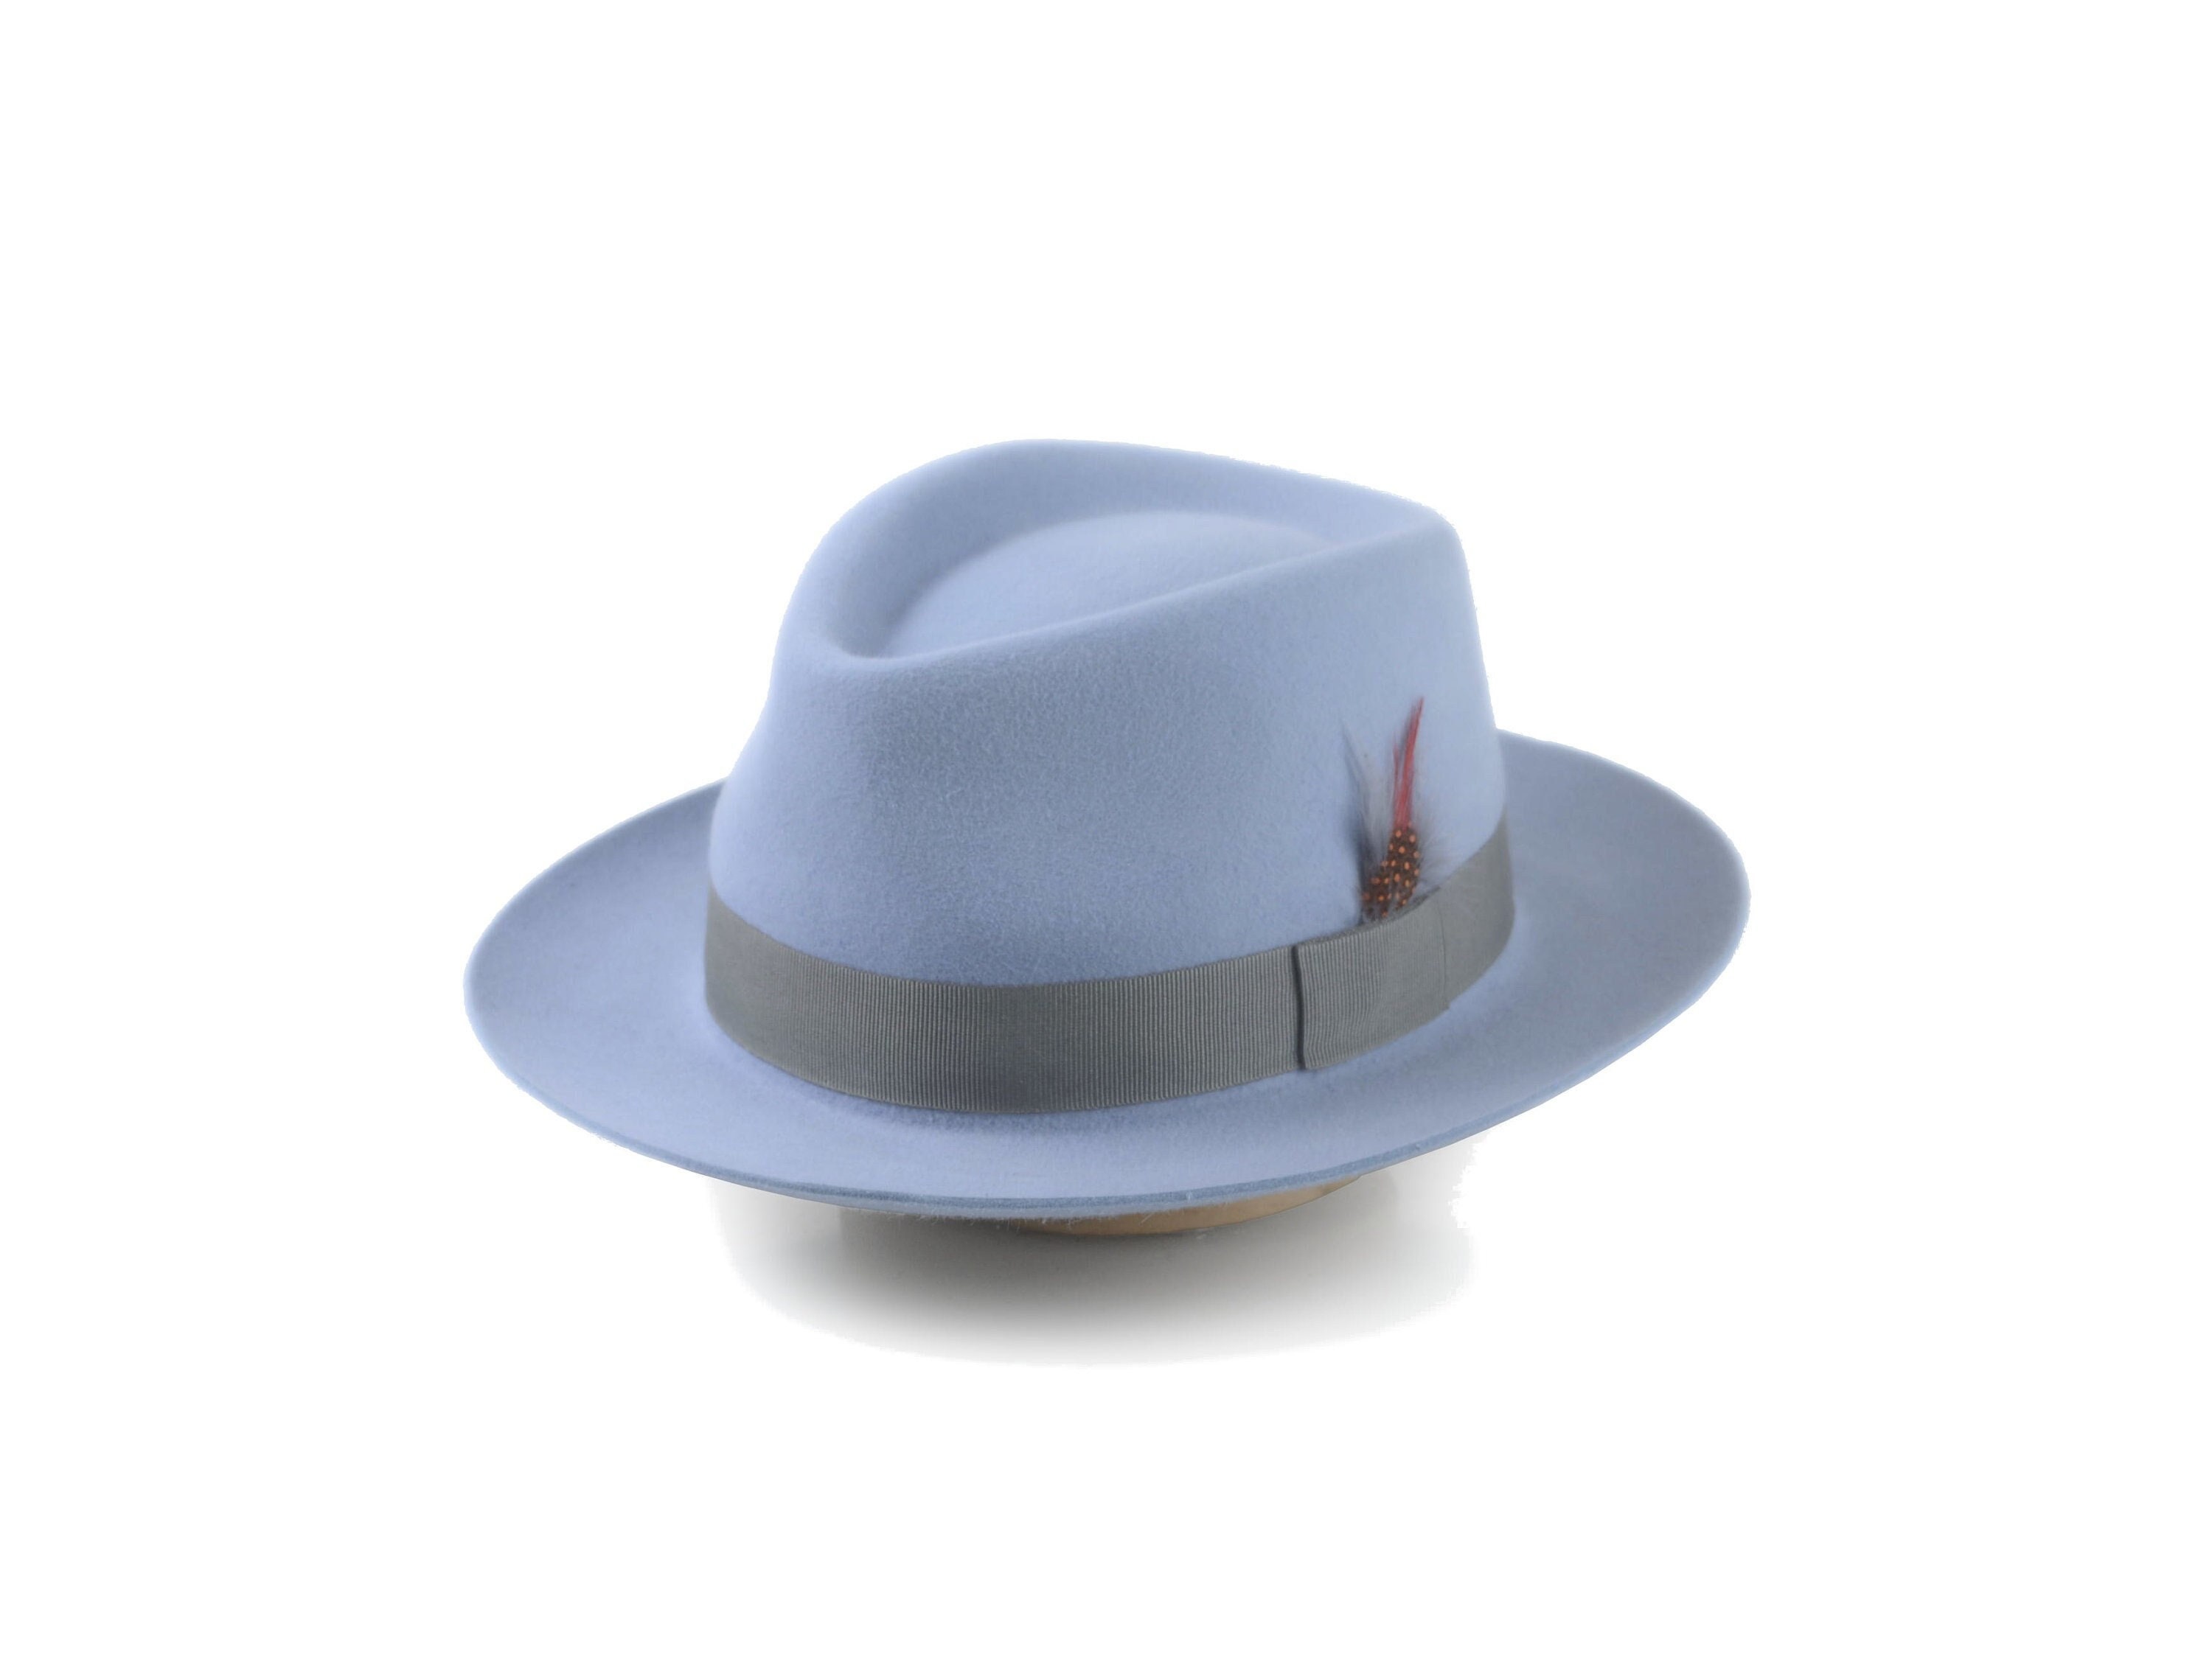 Handmade Brown Designer Fedora Hat w/ blue snake bottom size Large 